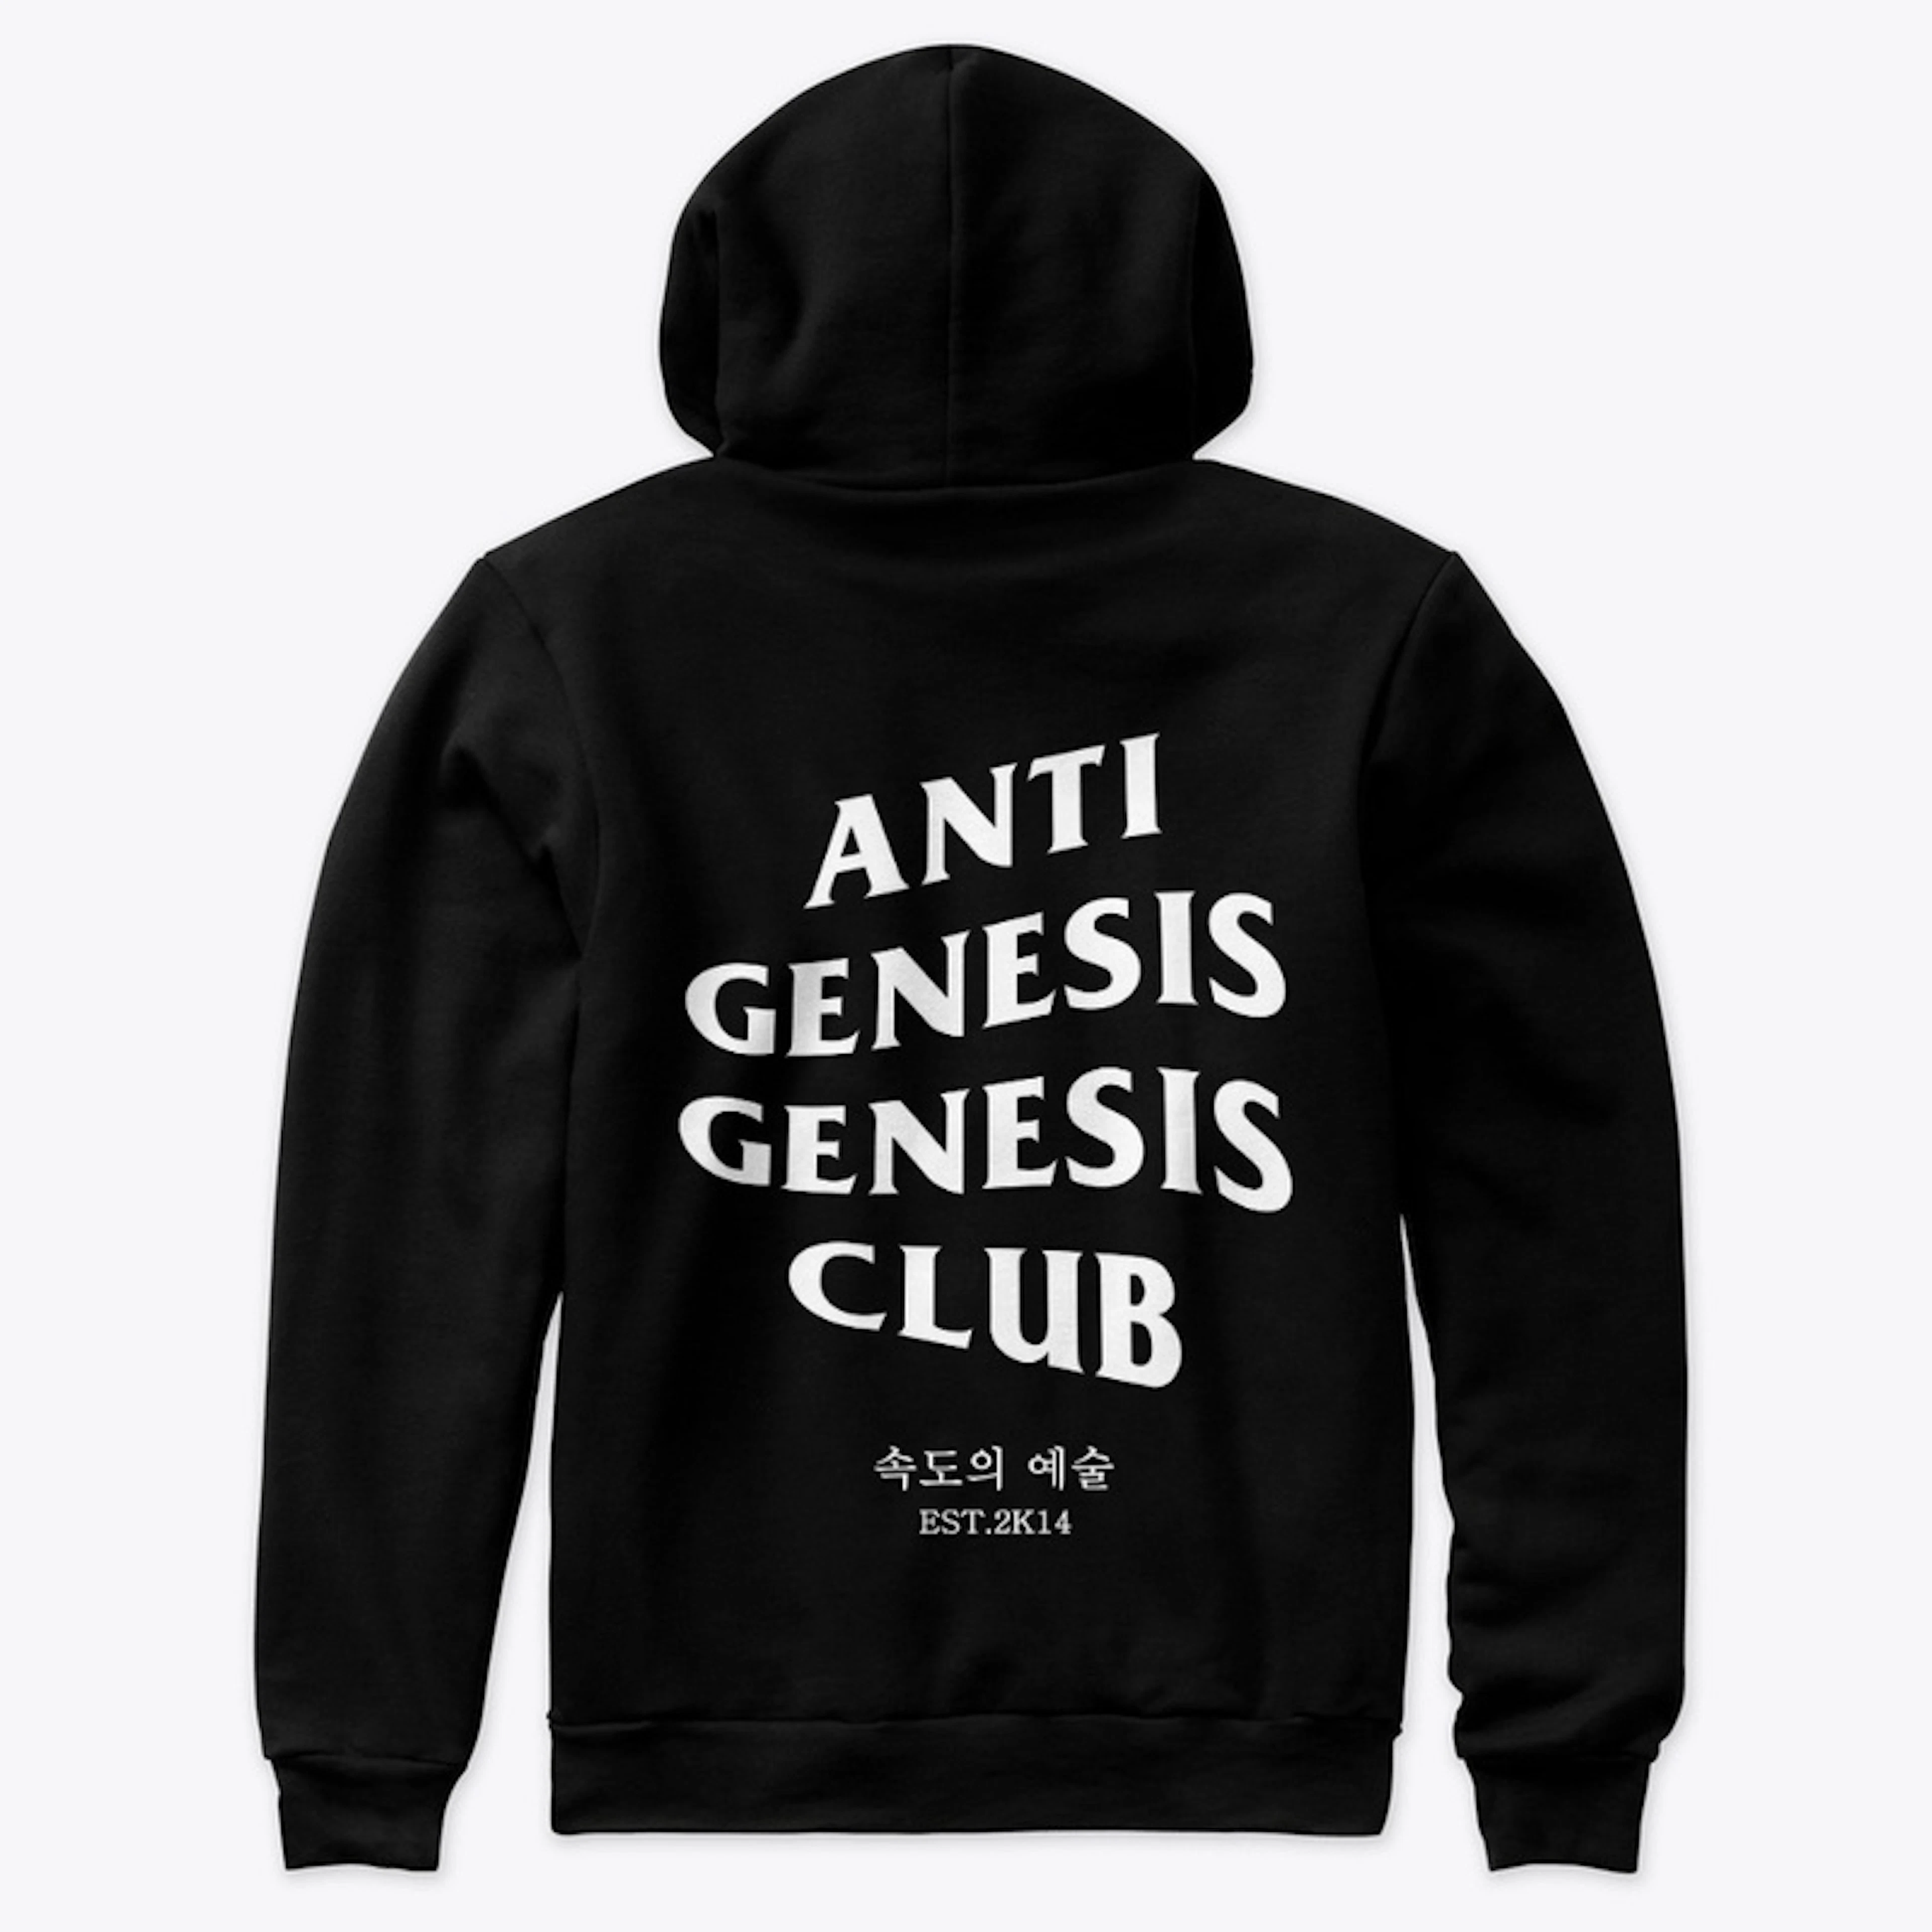 GENESIS MVMT (ANTI CLUB)